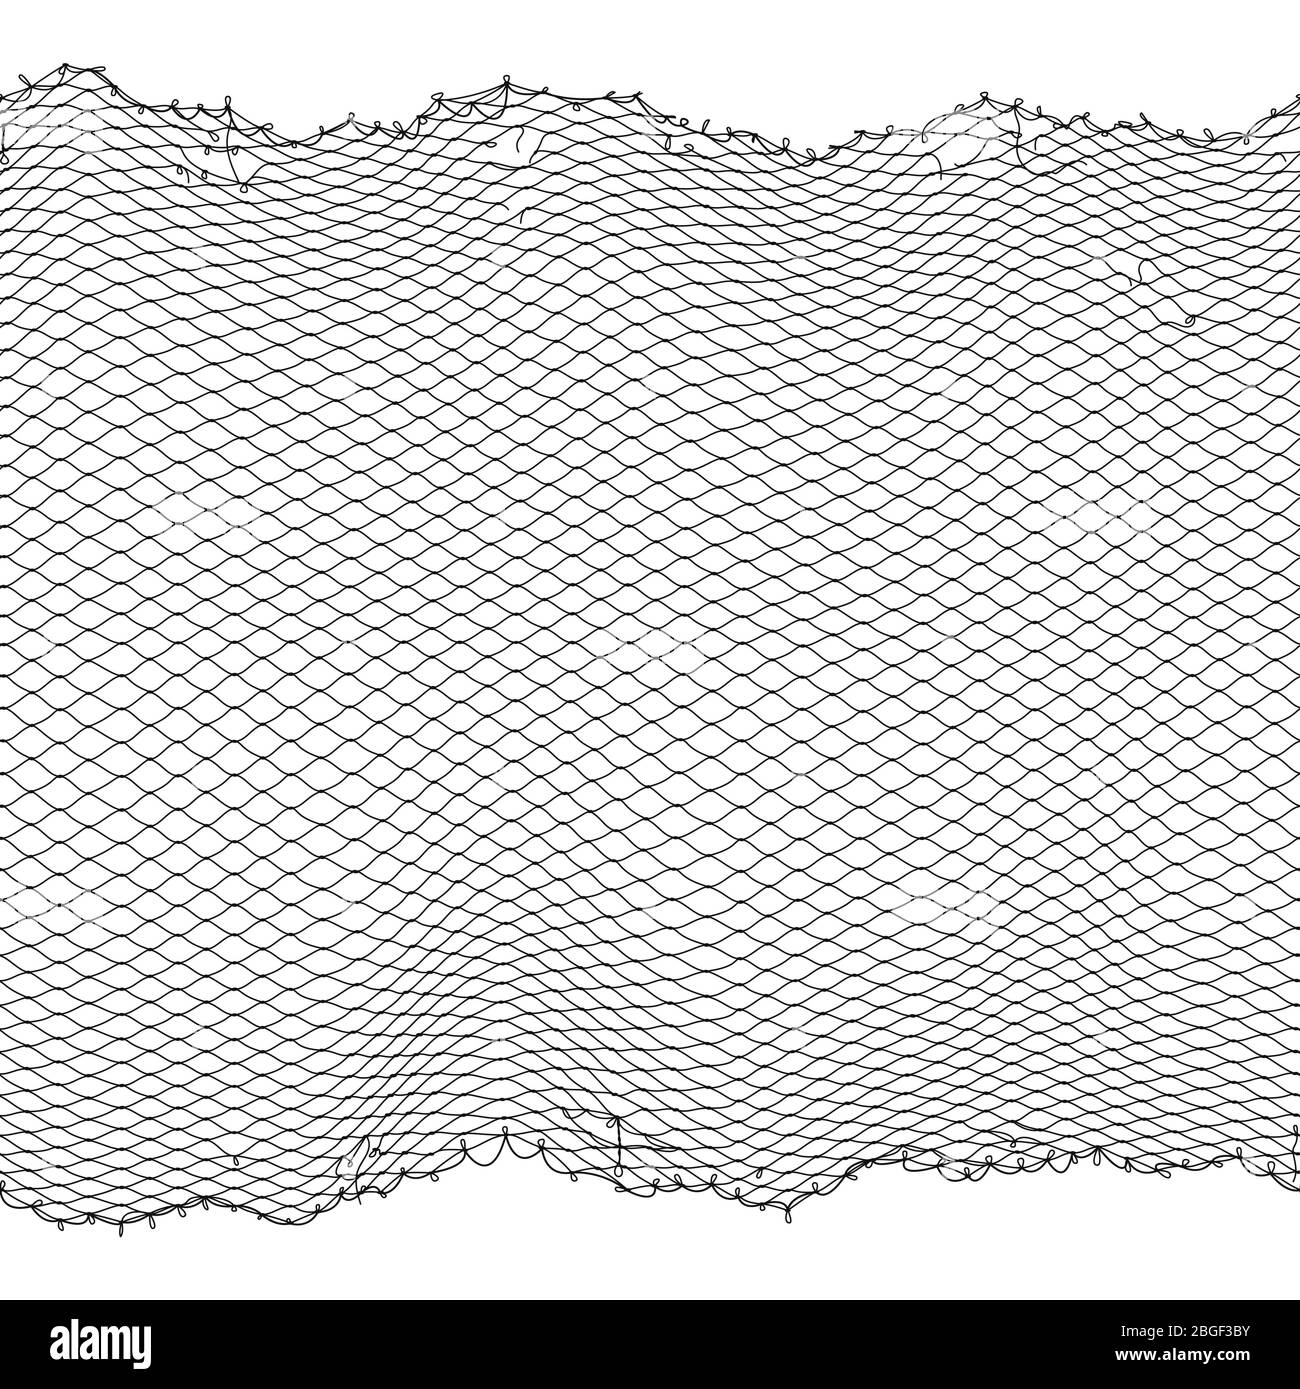 Black fisherman rope net vector seamless texture isolated on white.  Fisherman netting for hunting, fiber surface illustration Stock Vector  Image & Art - Alamy